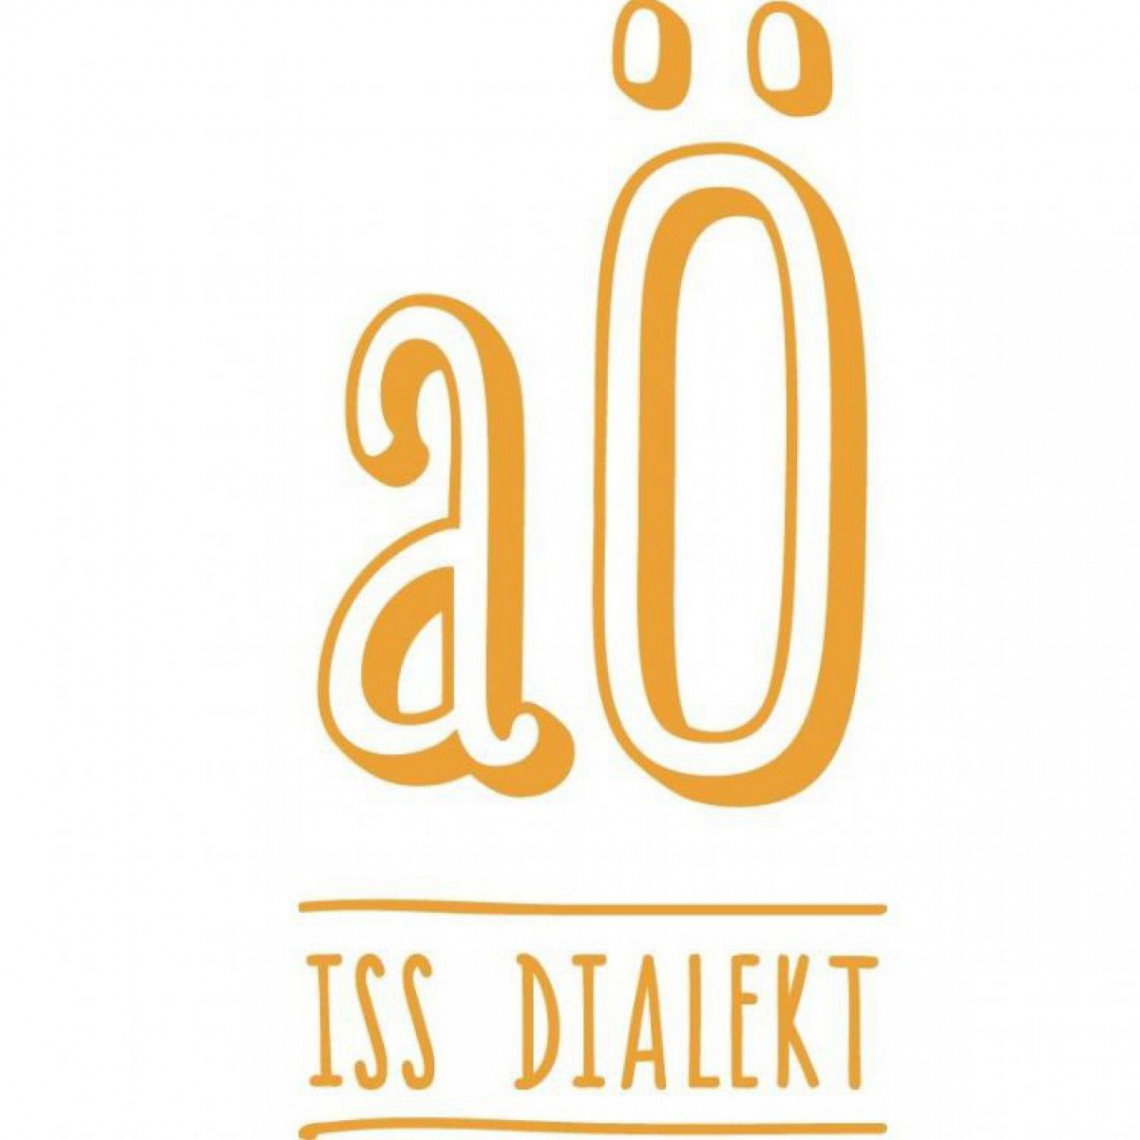 Logo Iss Dialekt